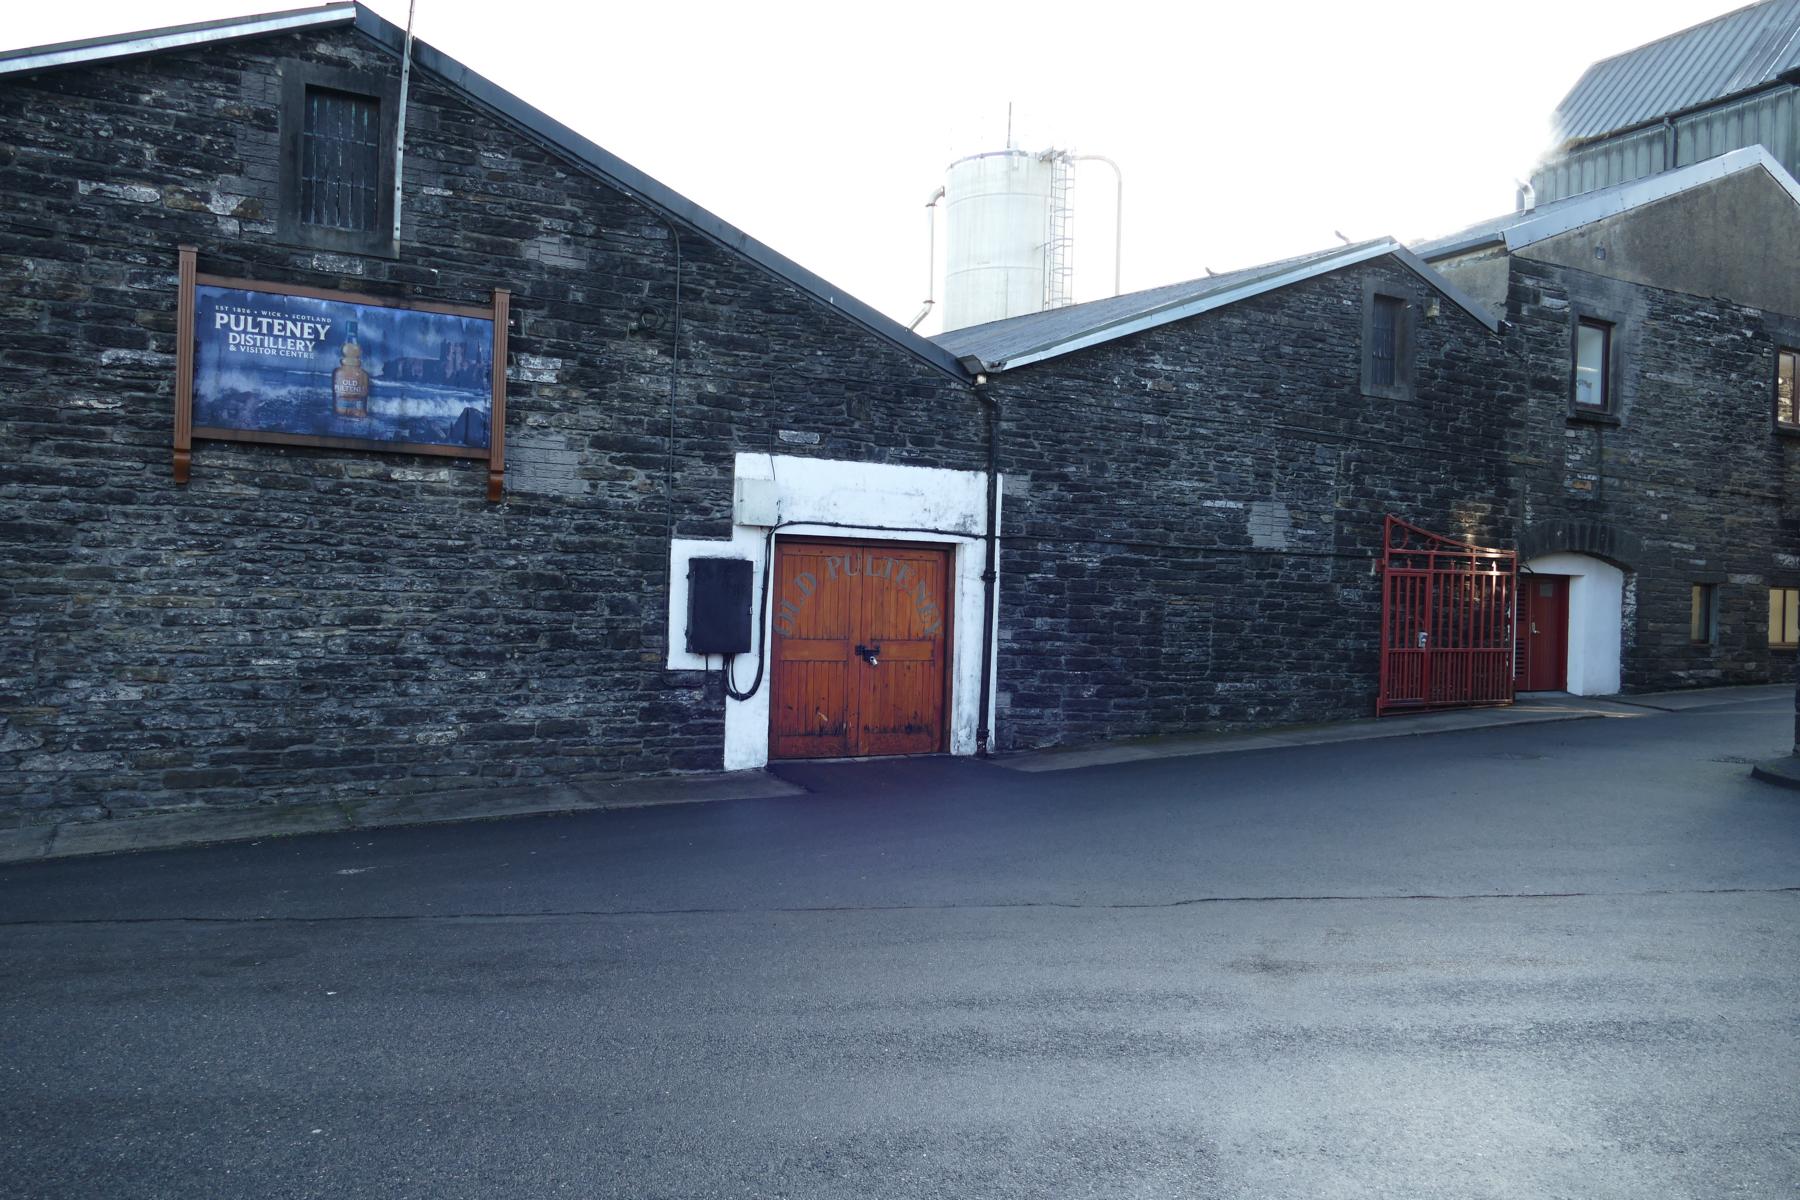 Pulteney  Distillery